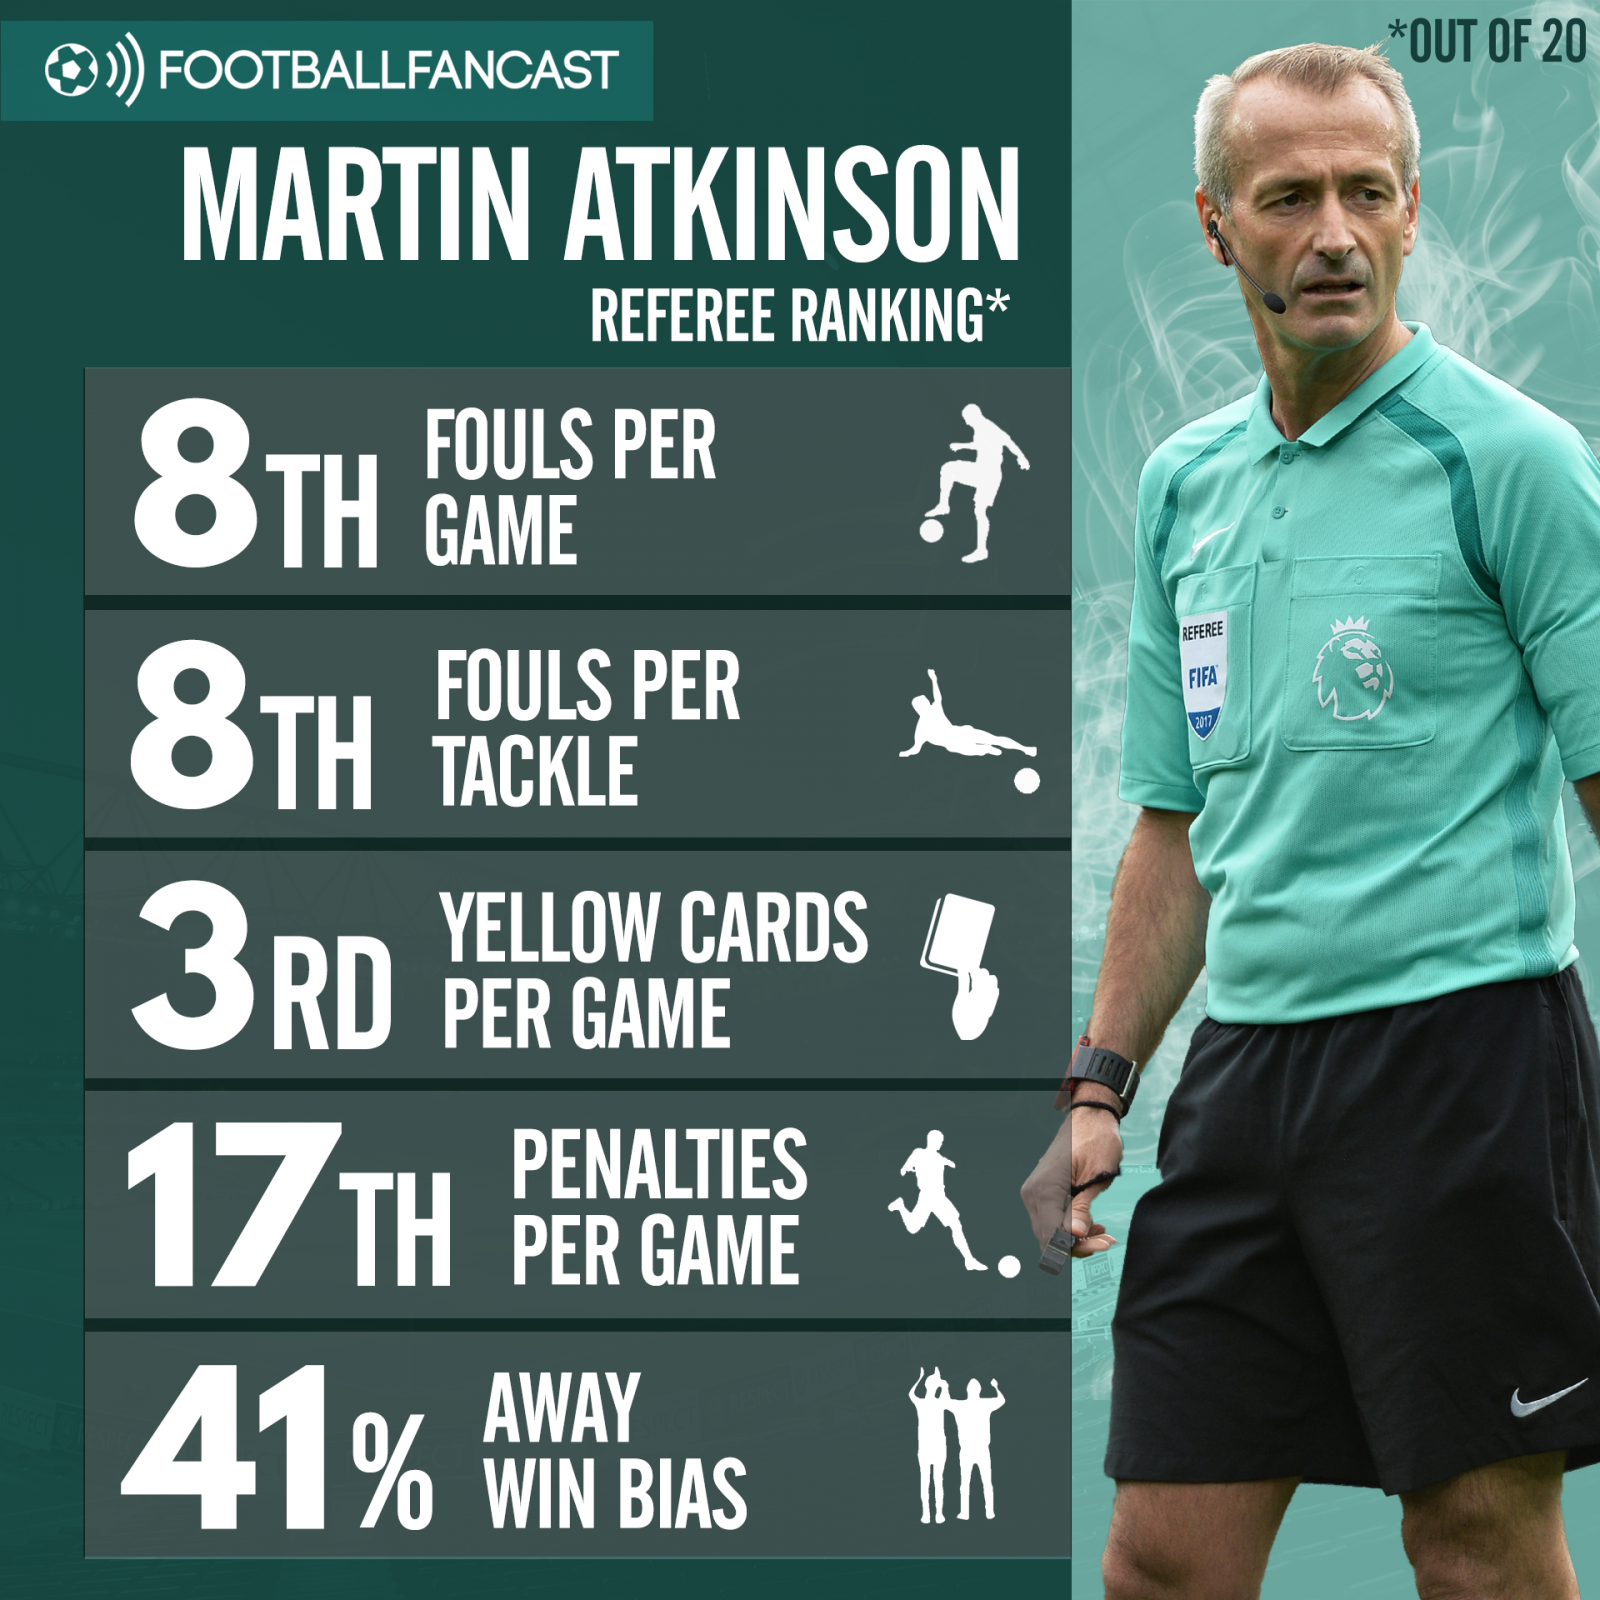 Referee Martin Atkinson's stats this season